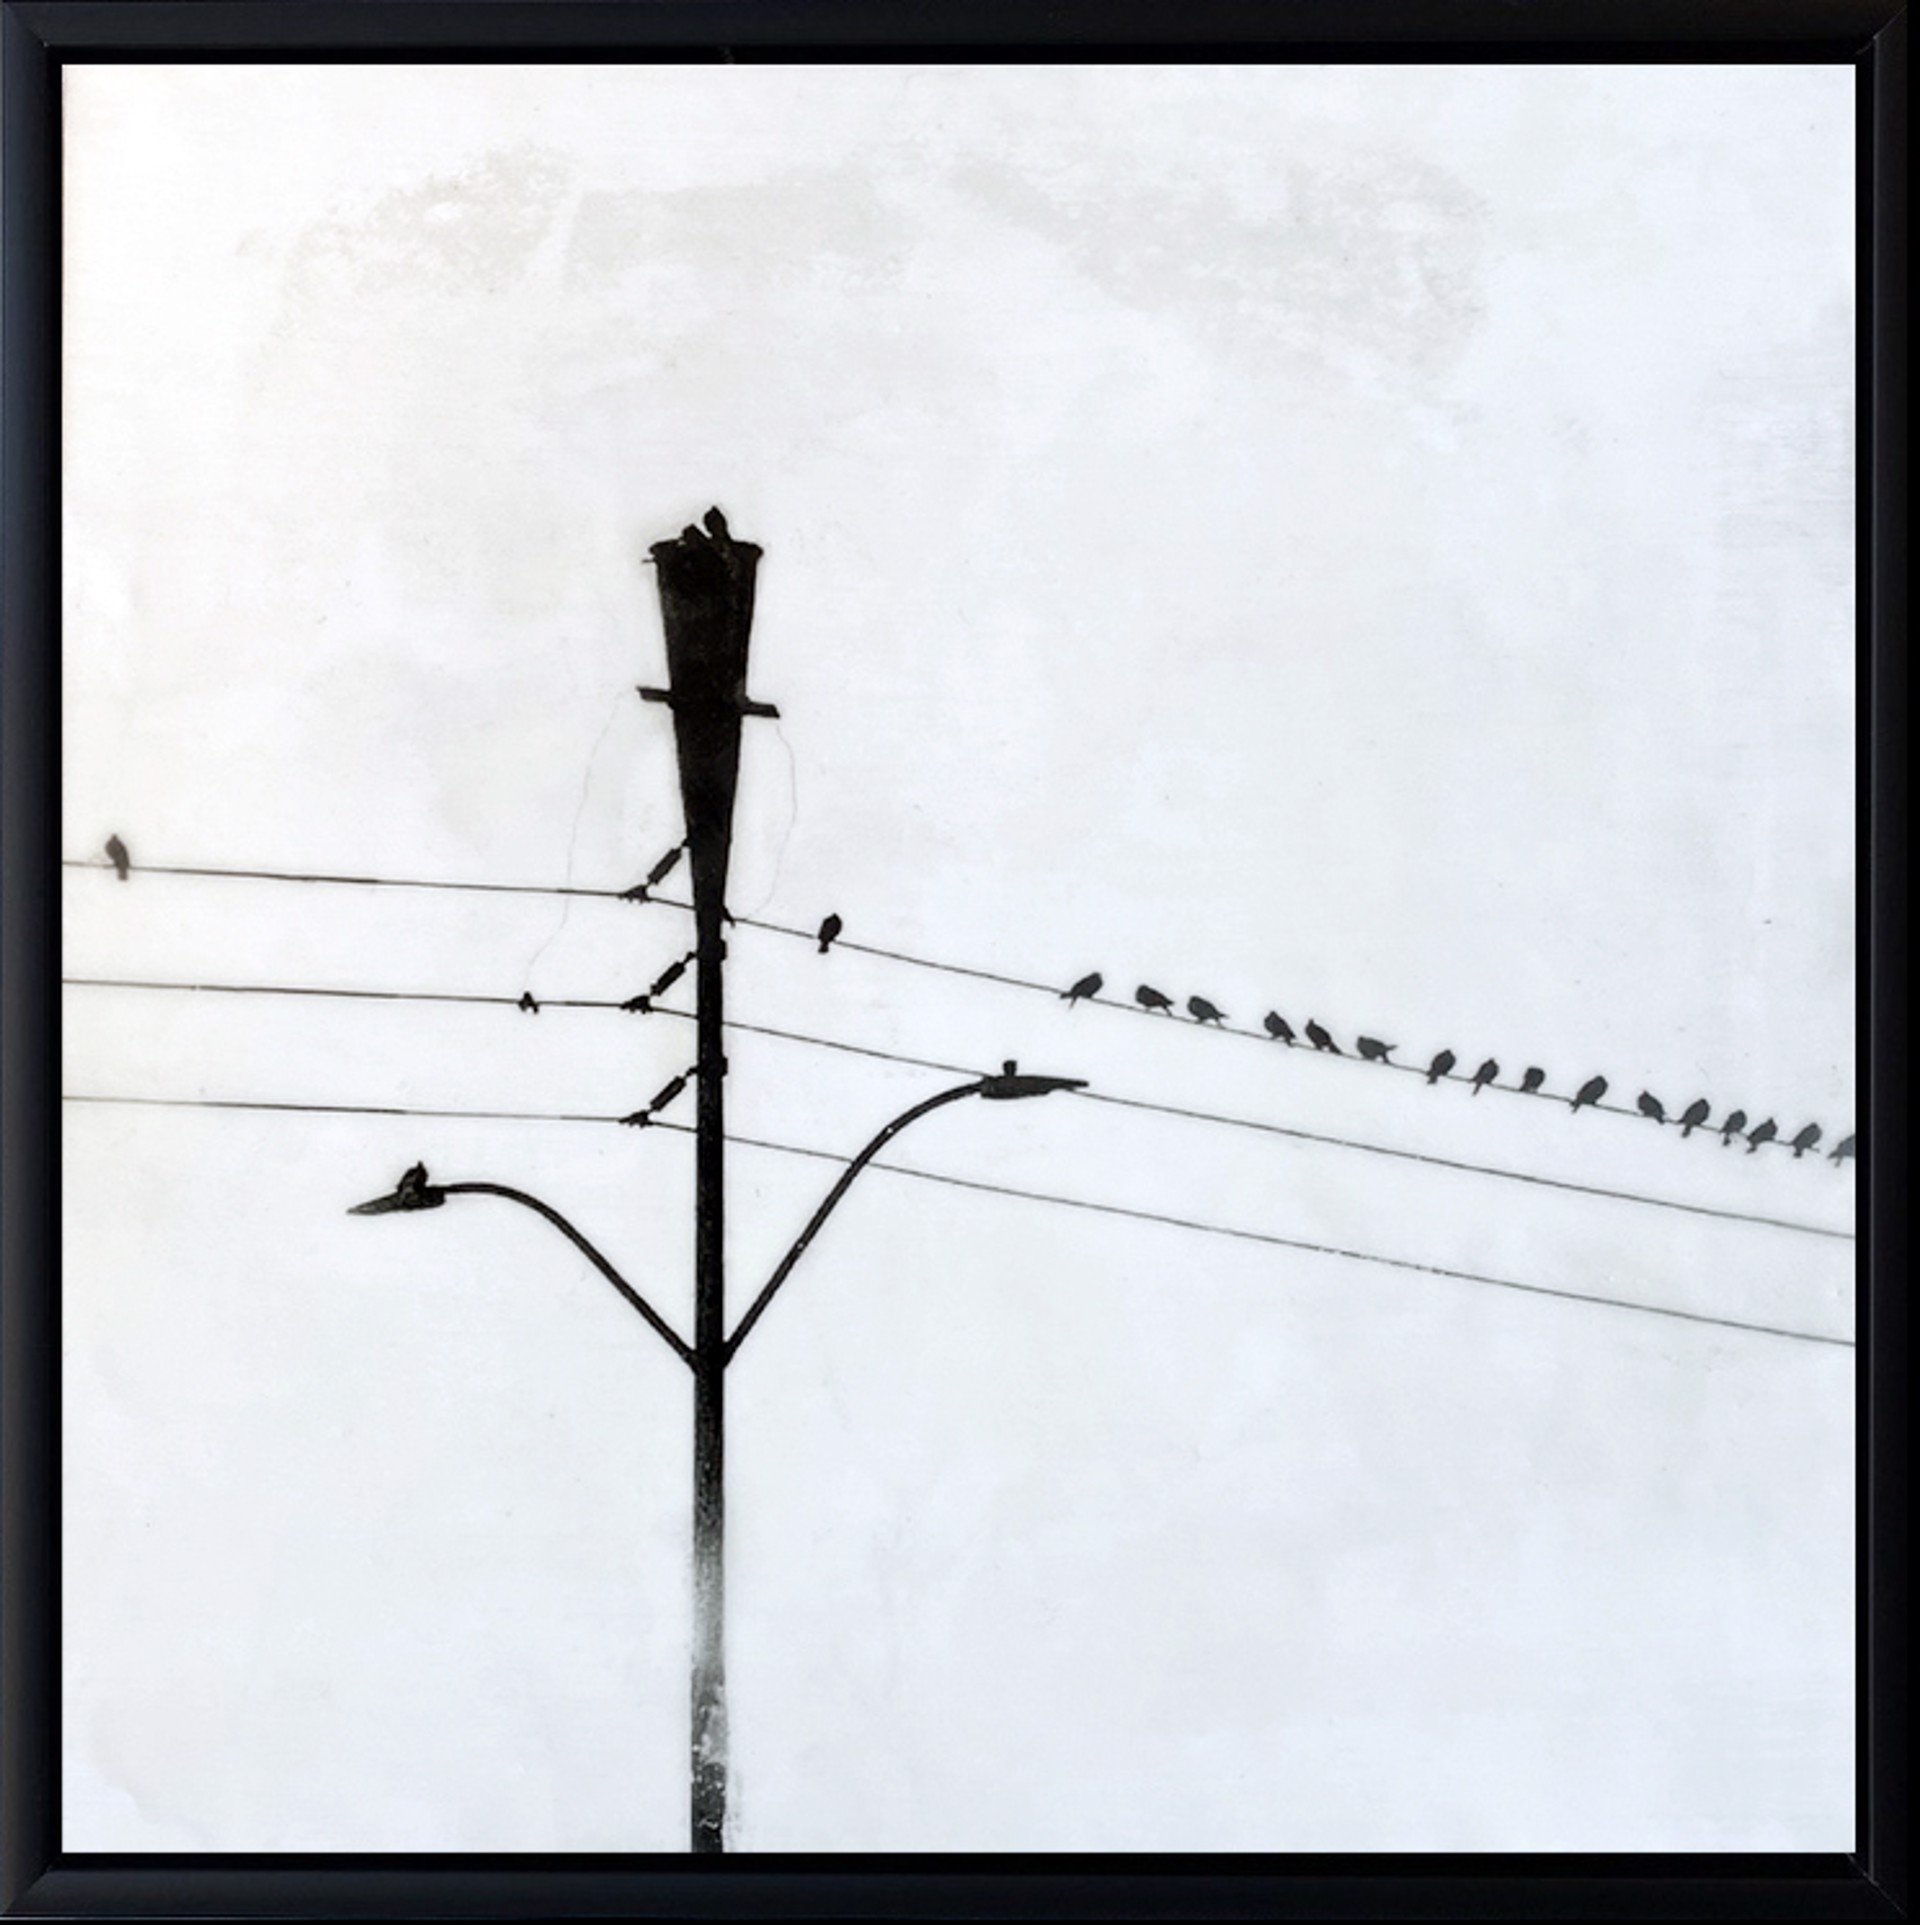 Lightpole With Birds on Wires by Suzie Buchholz